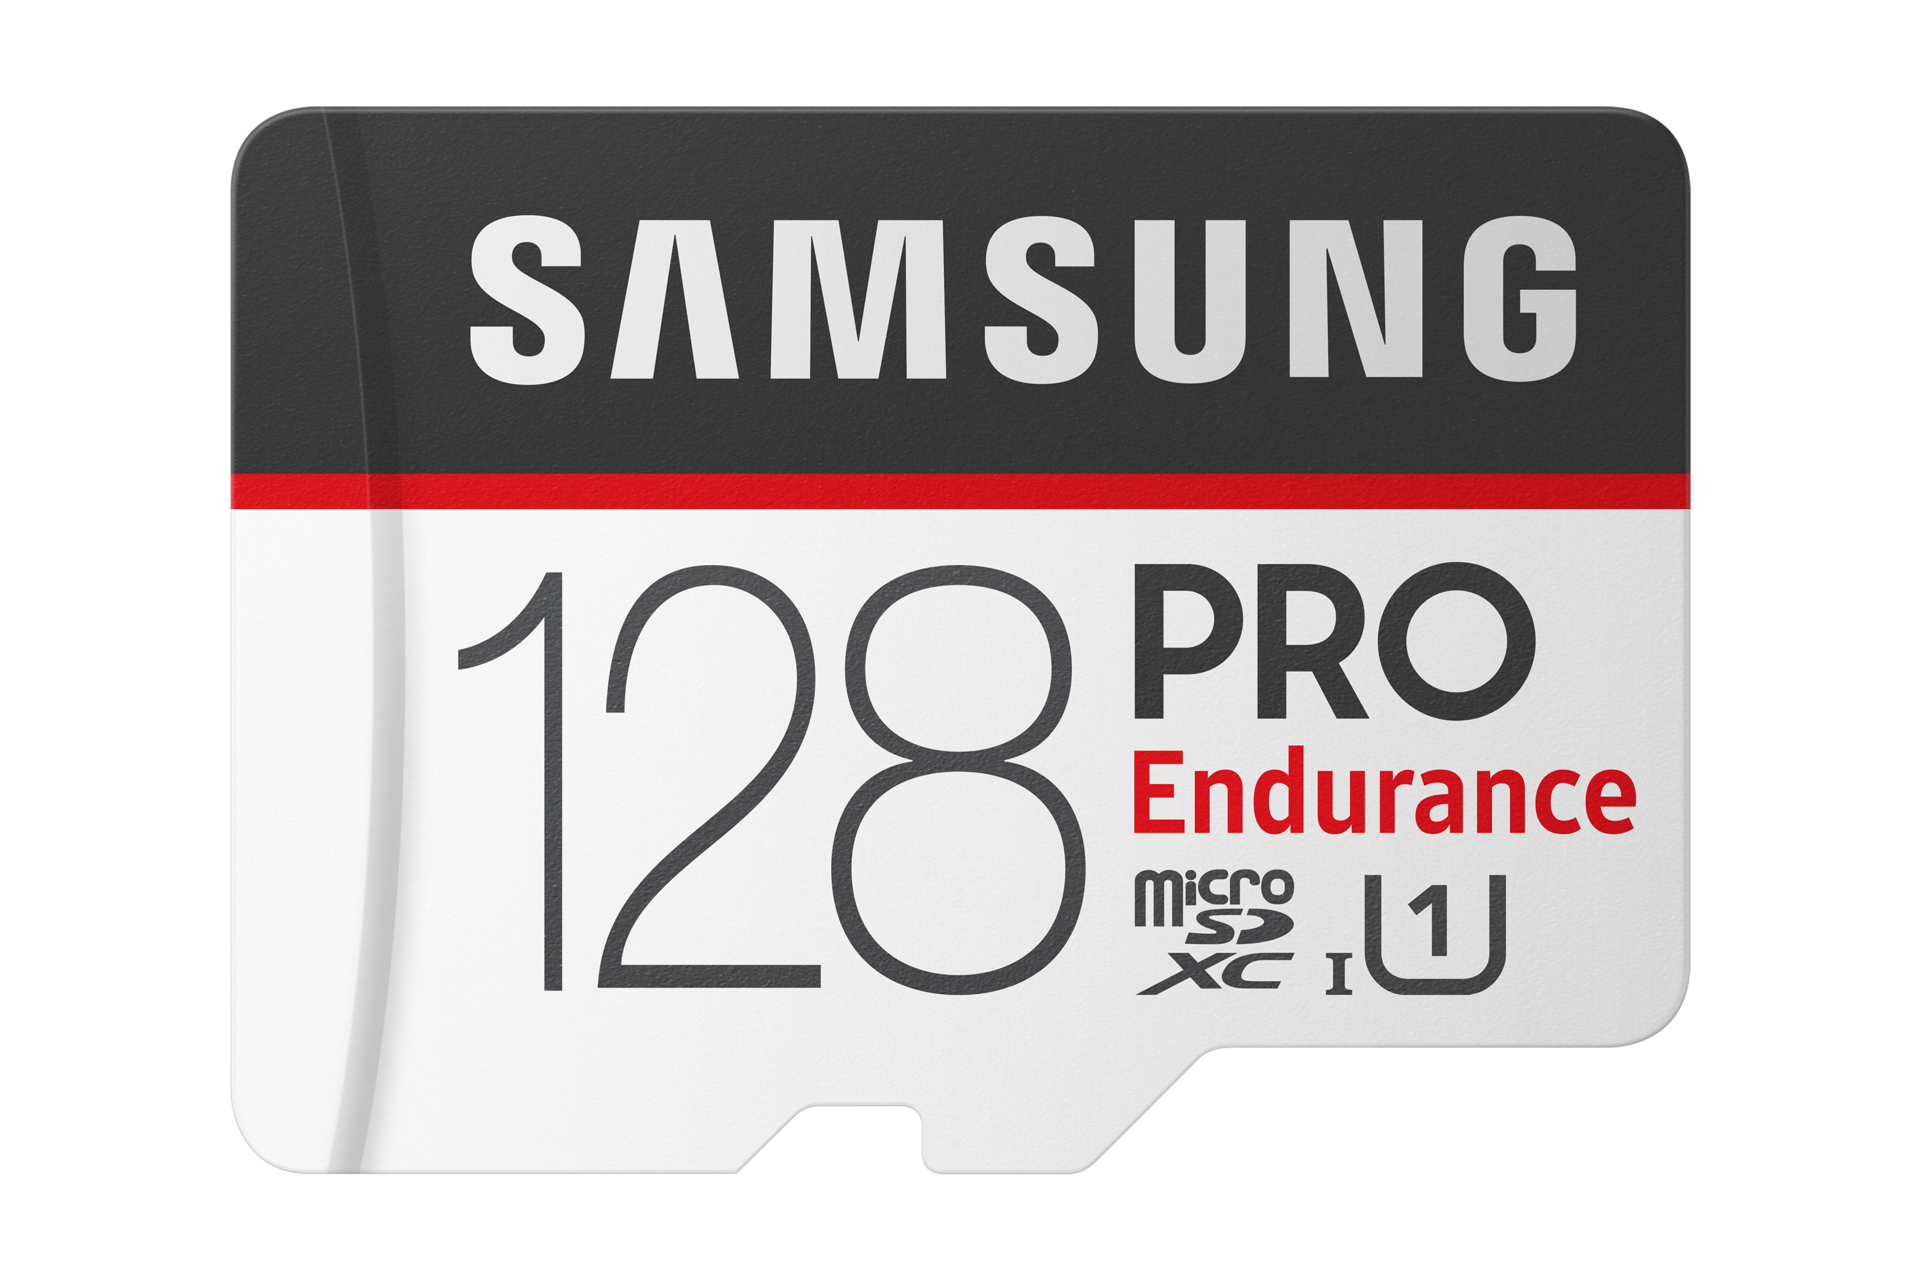 Front View of the Samsung 128GB PRO Endurance microSD Card - MJ128GA